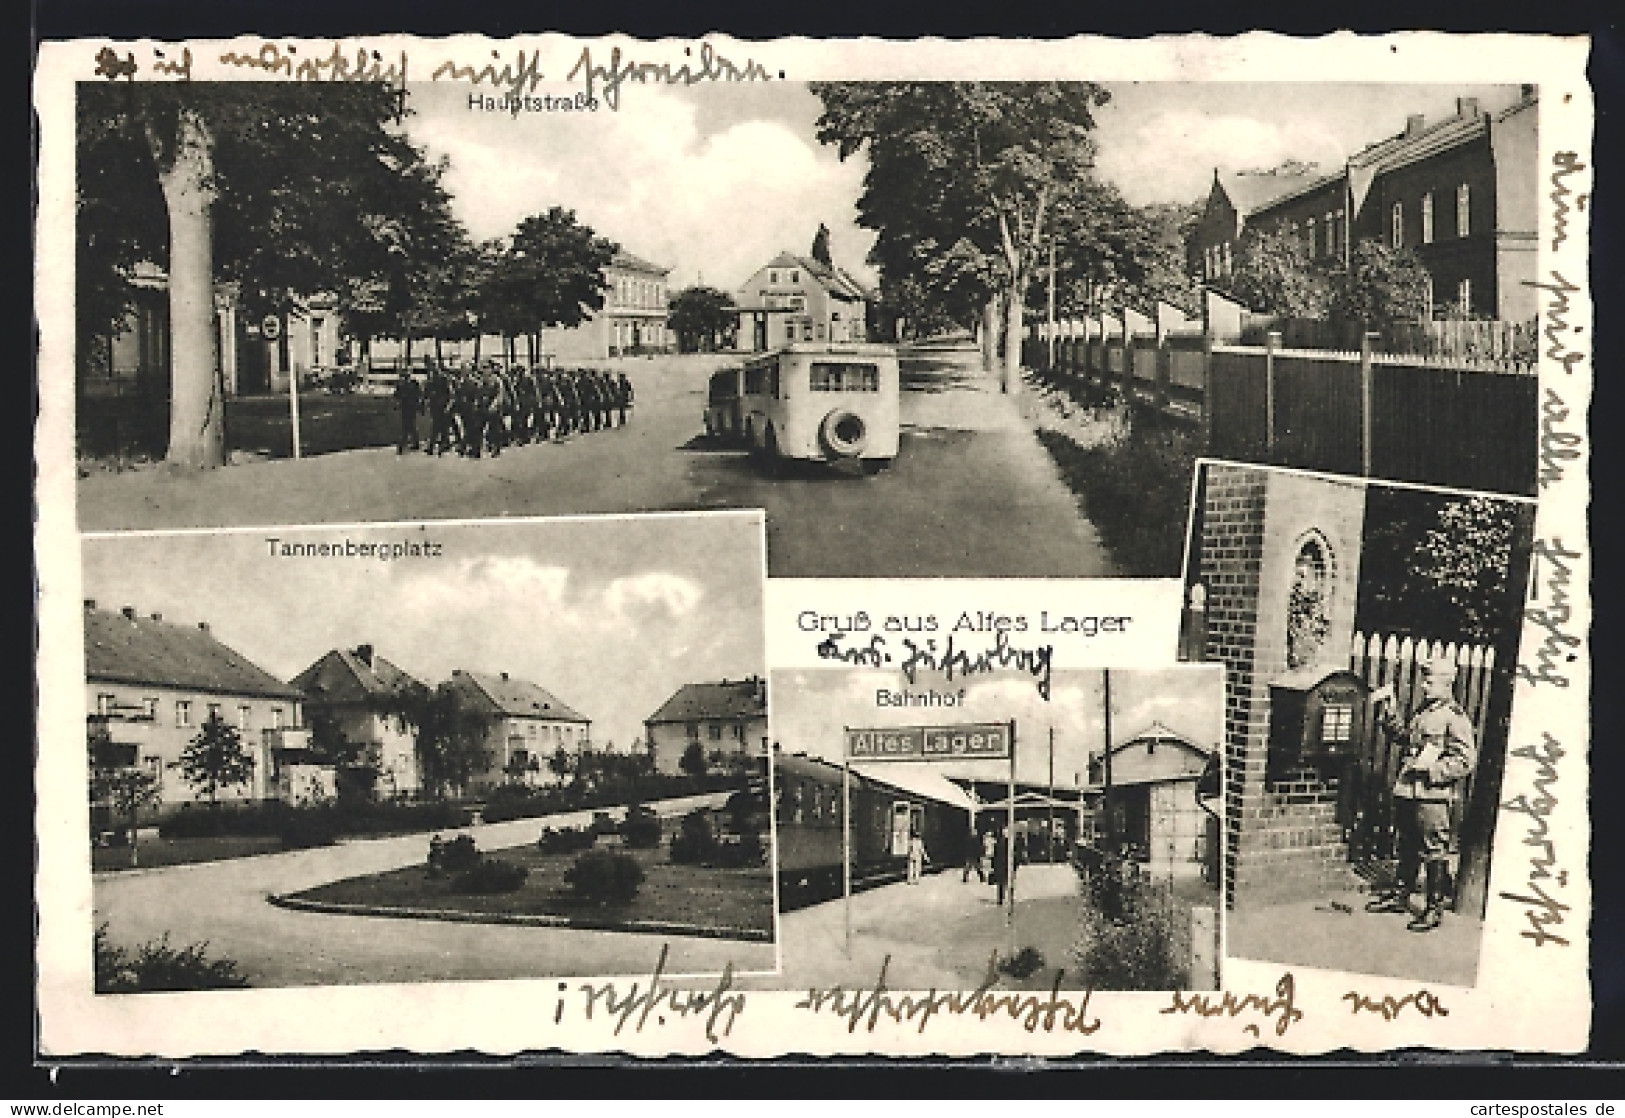 AK Jüterbog, Altes Lager, Hauptstrasse, Tannebergplatz, Bahnhof  - Jüterbog